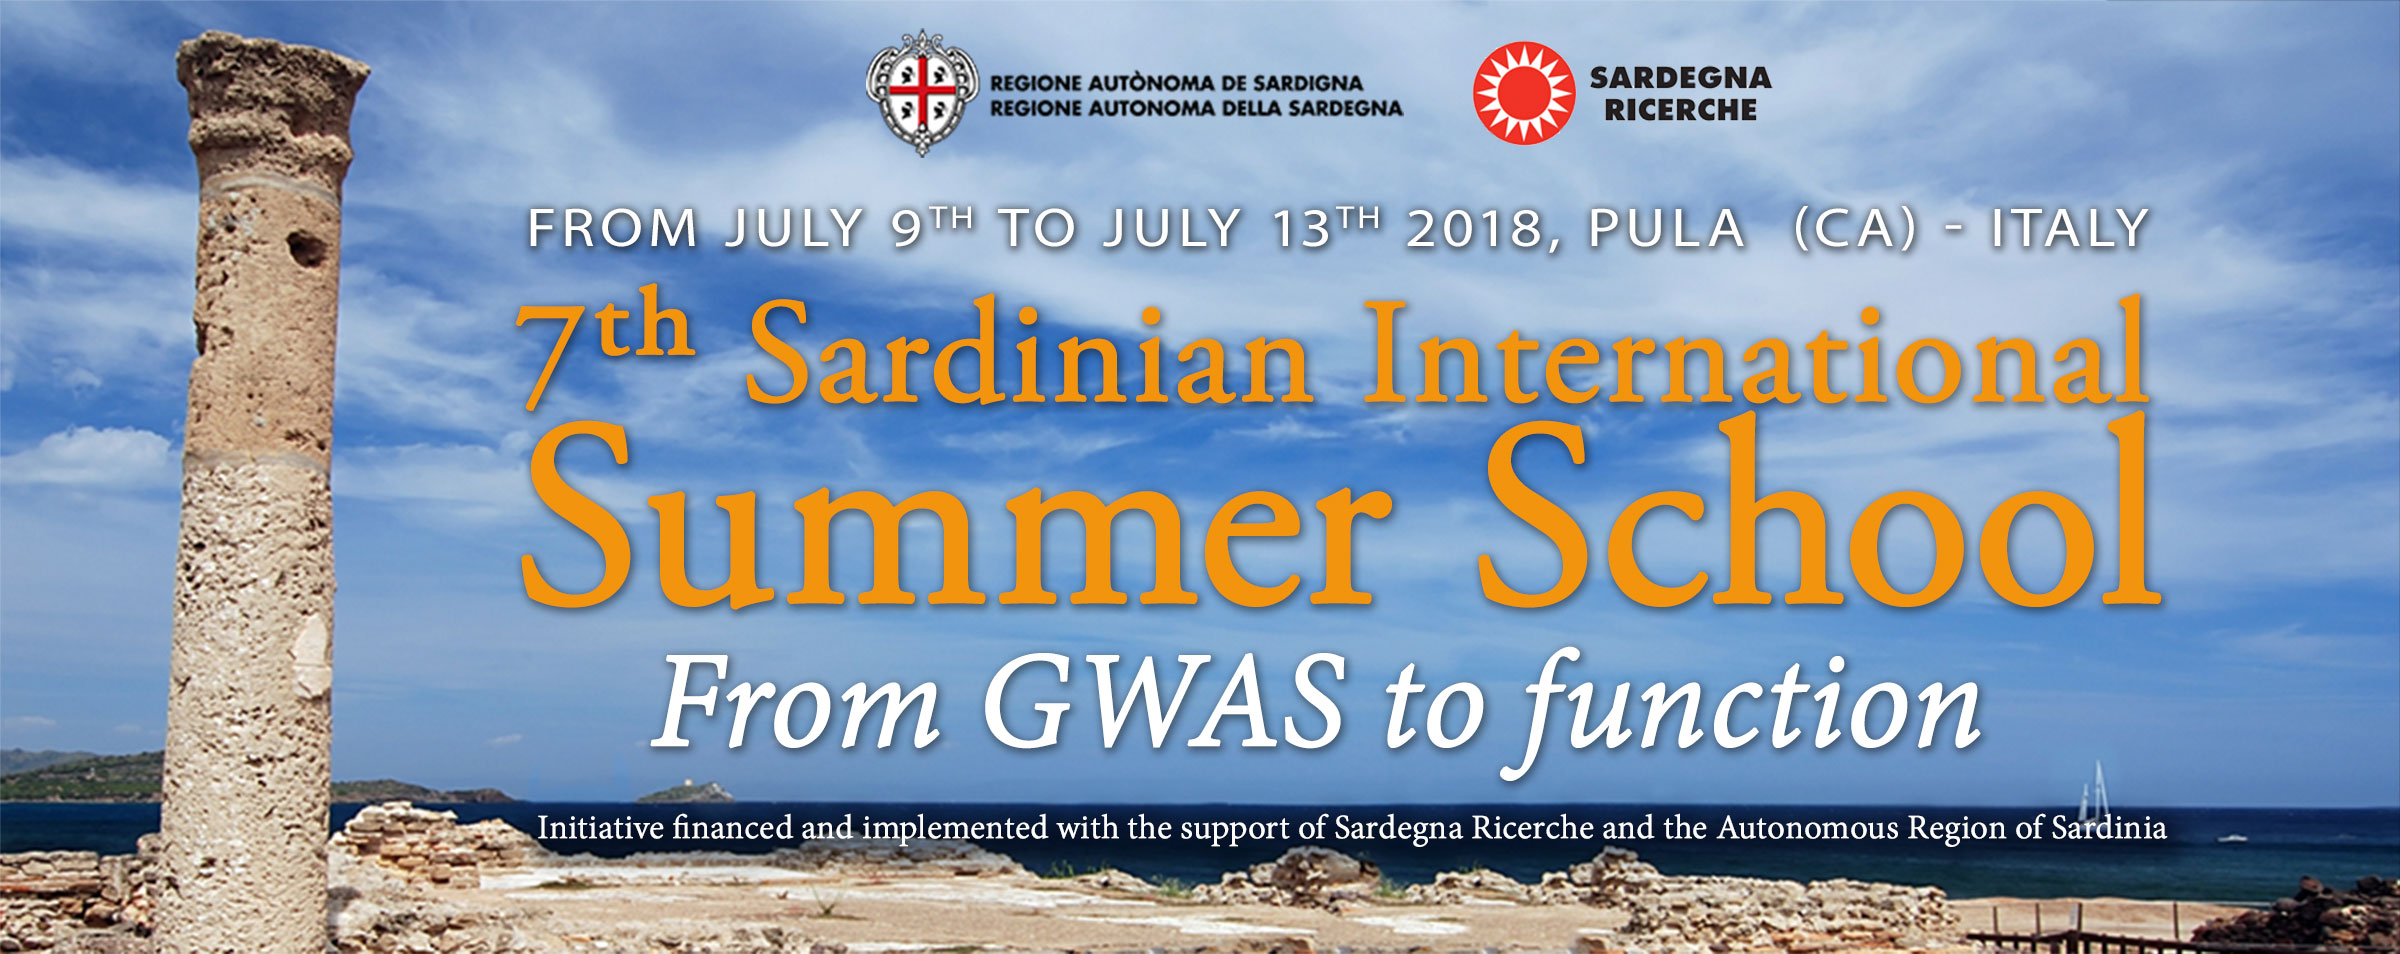 7th Sardinian International Summer School ‘From GWAS to function’